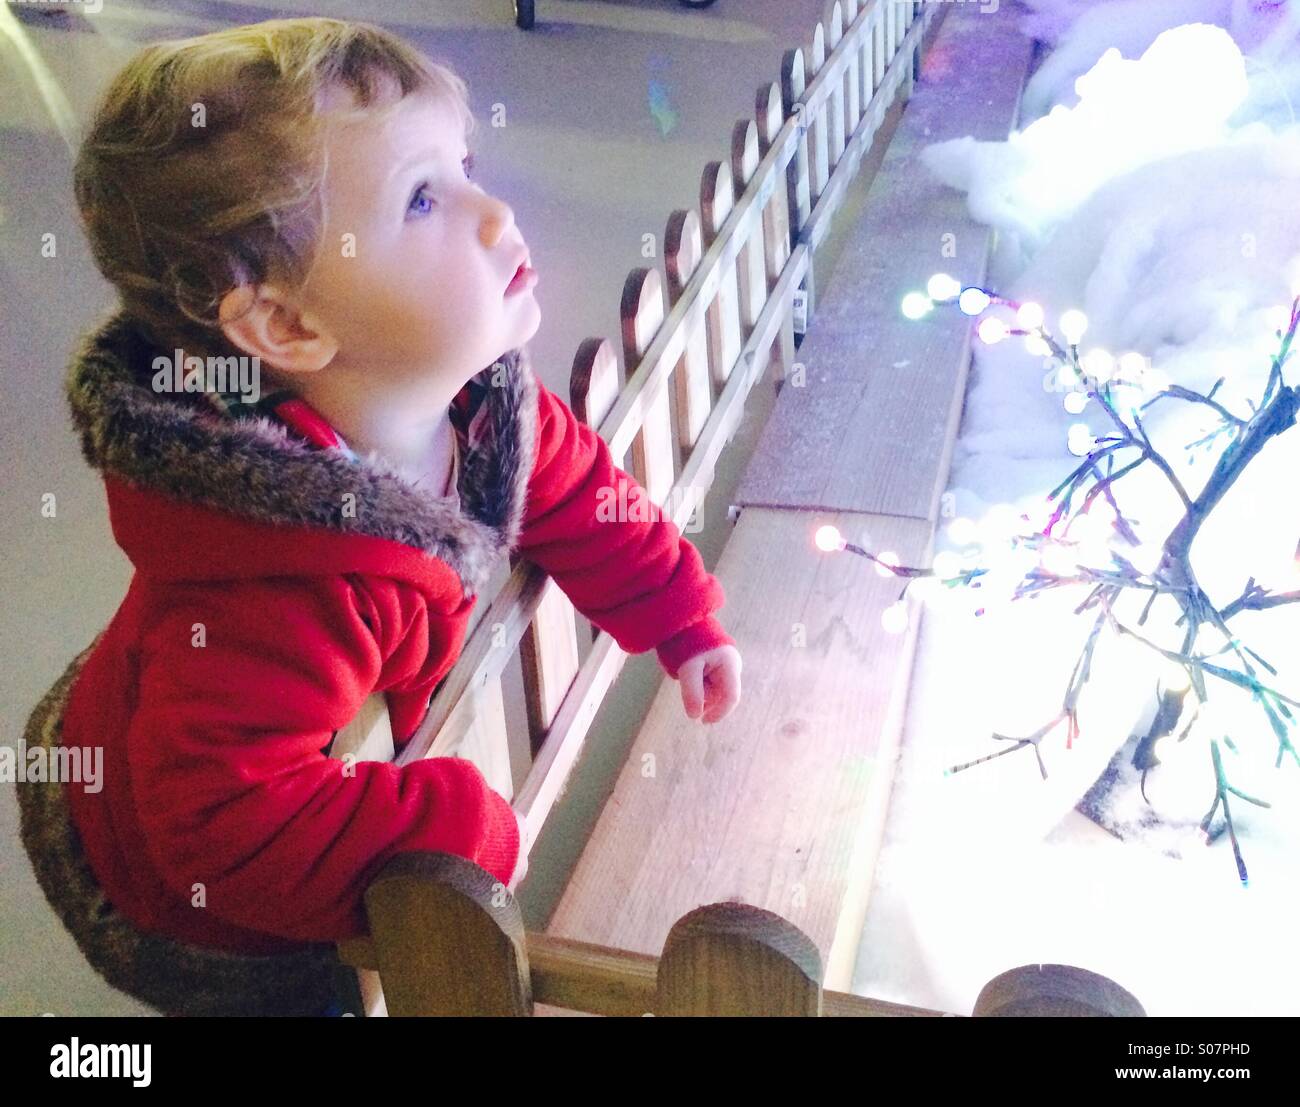 Little girl staring at Christmas lights in wonder Stock Photo